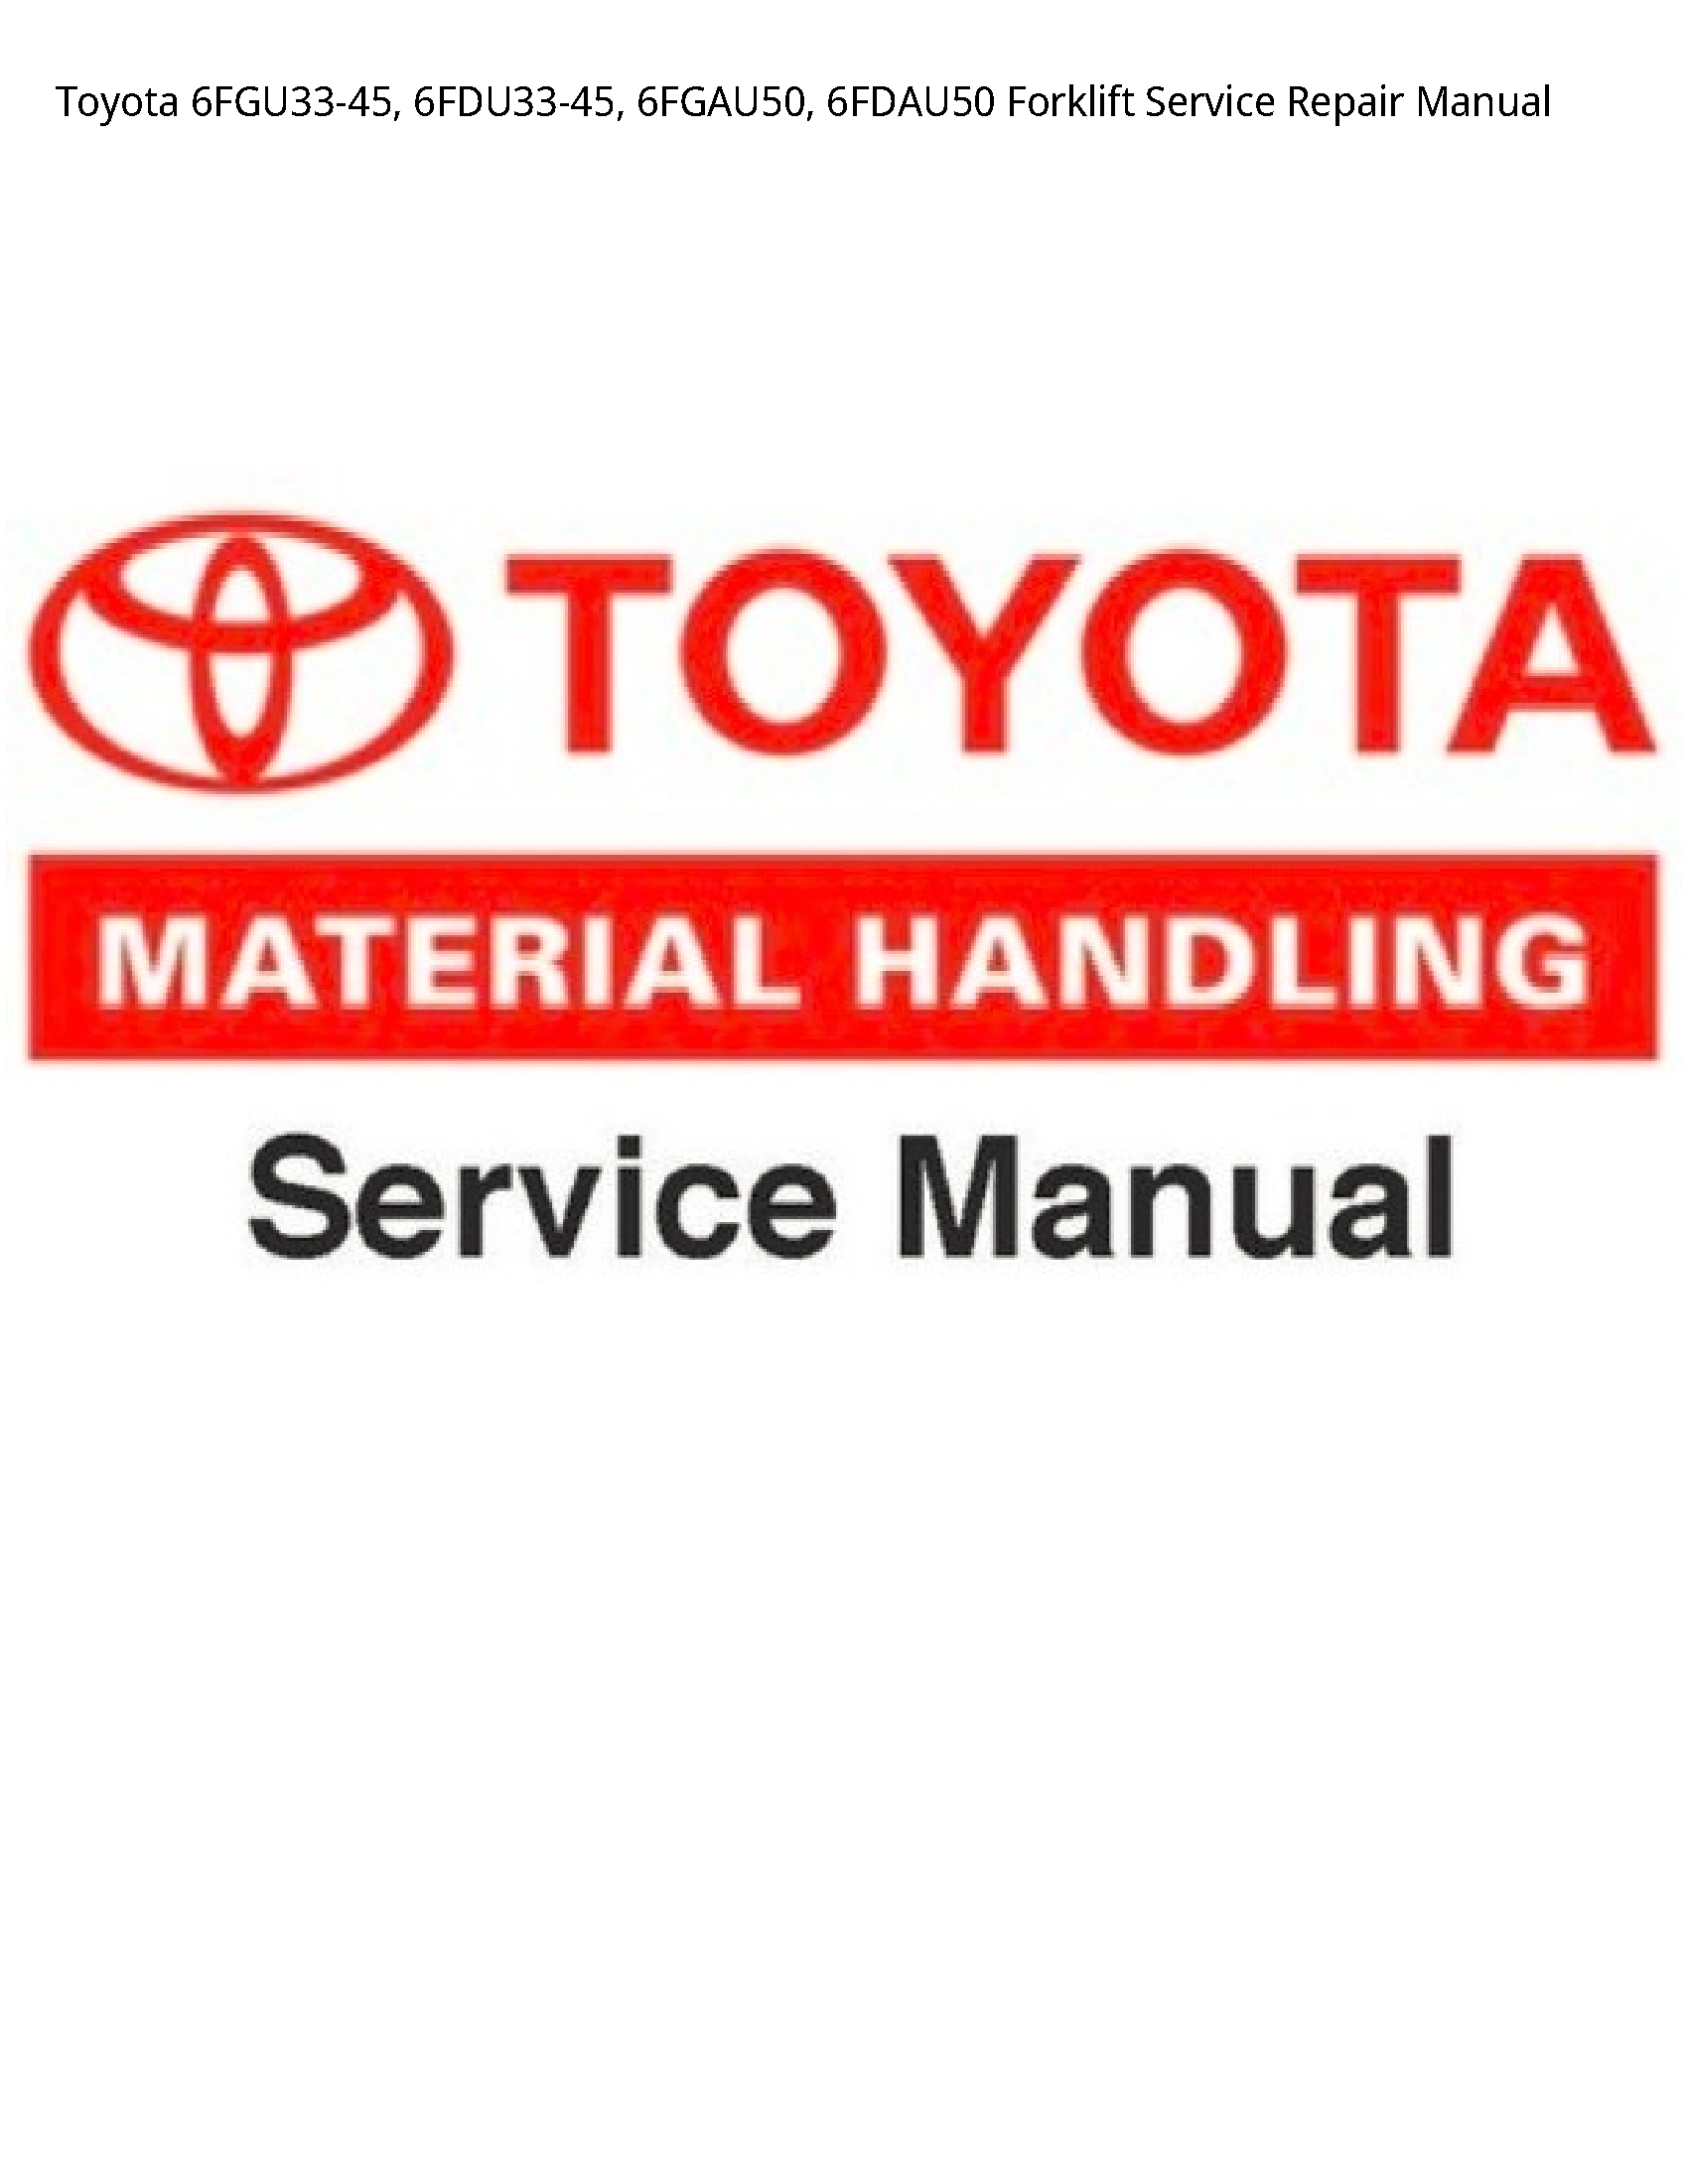 Toyota 6FGU33-45 Forklift manual